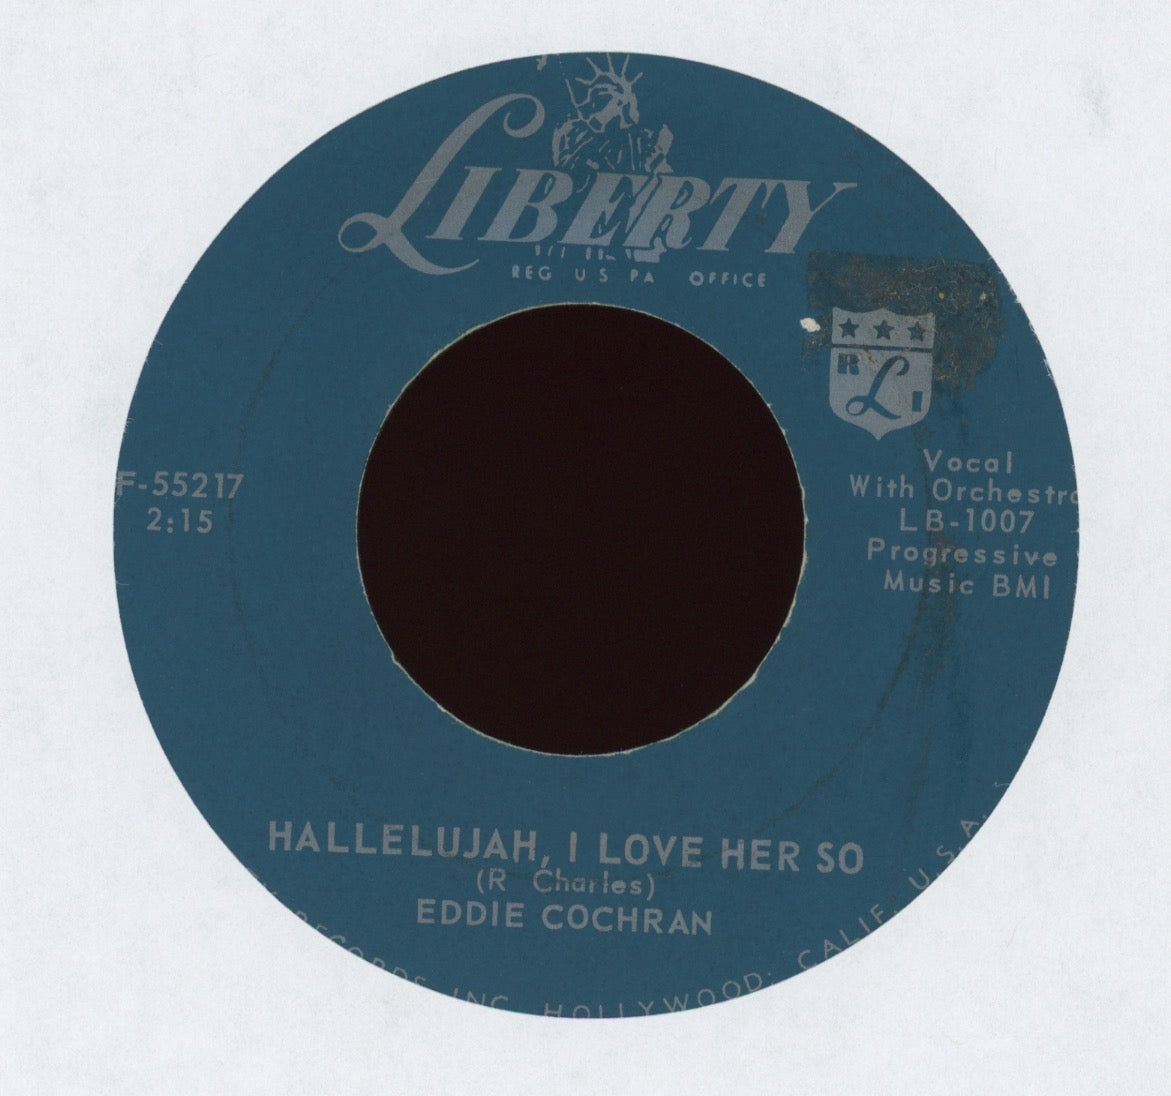 Eddie Cochran - Hallelujah, I Love Her So on Liberty Rockabilly 45